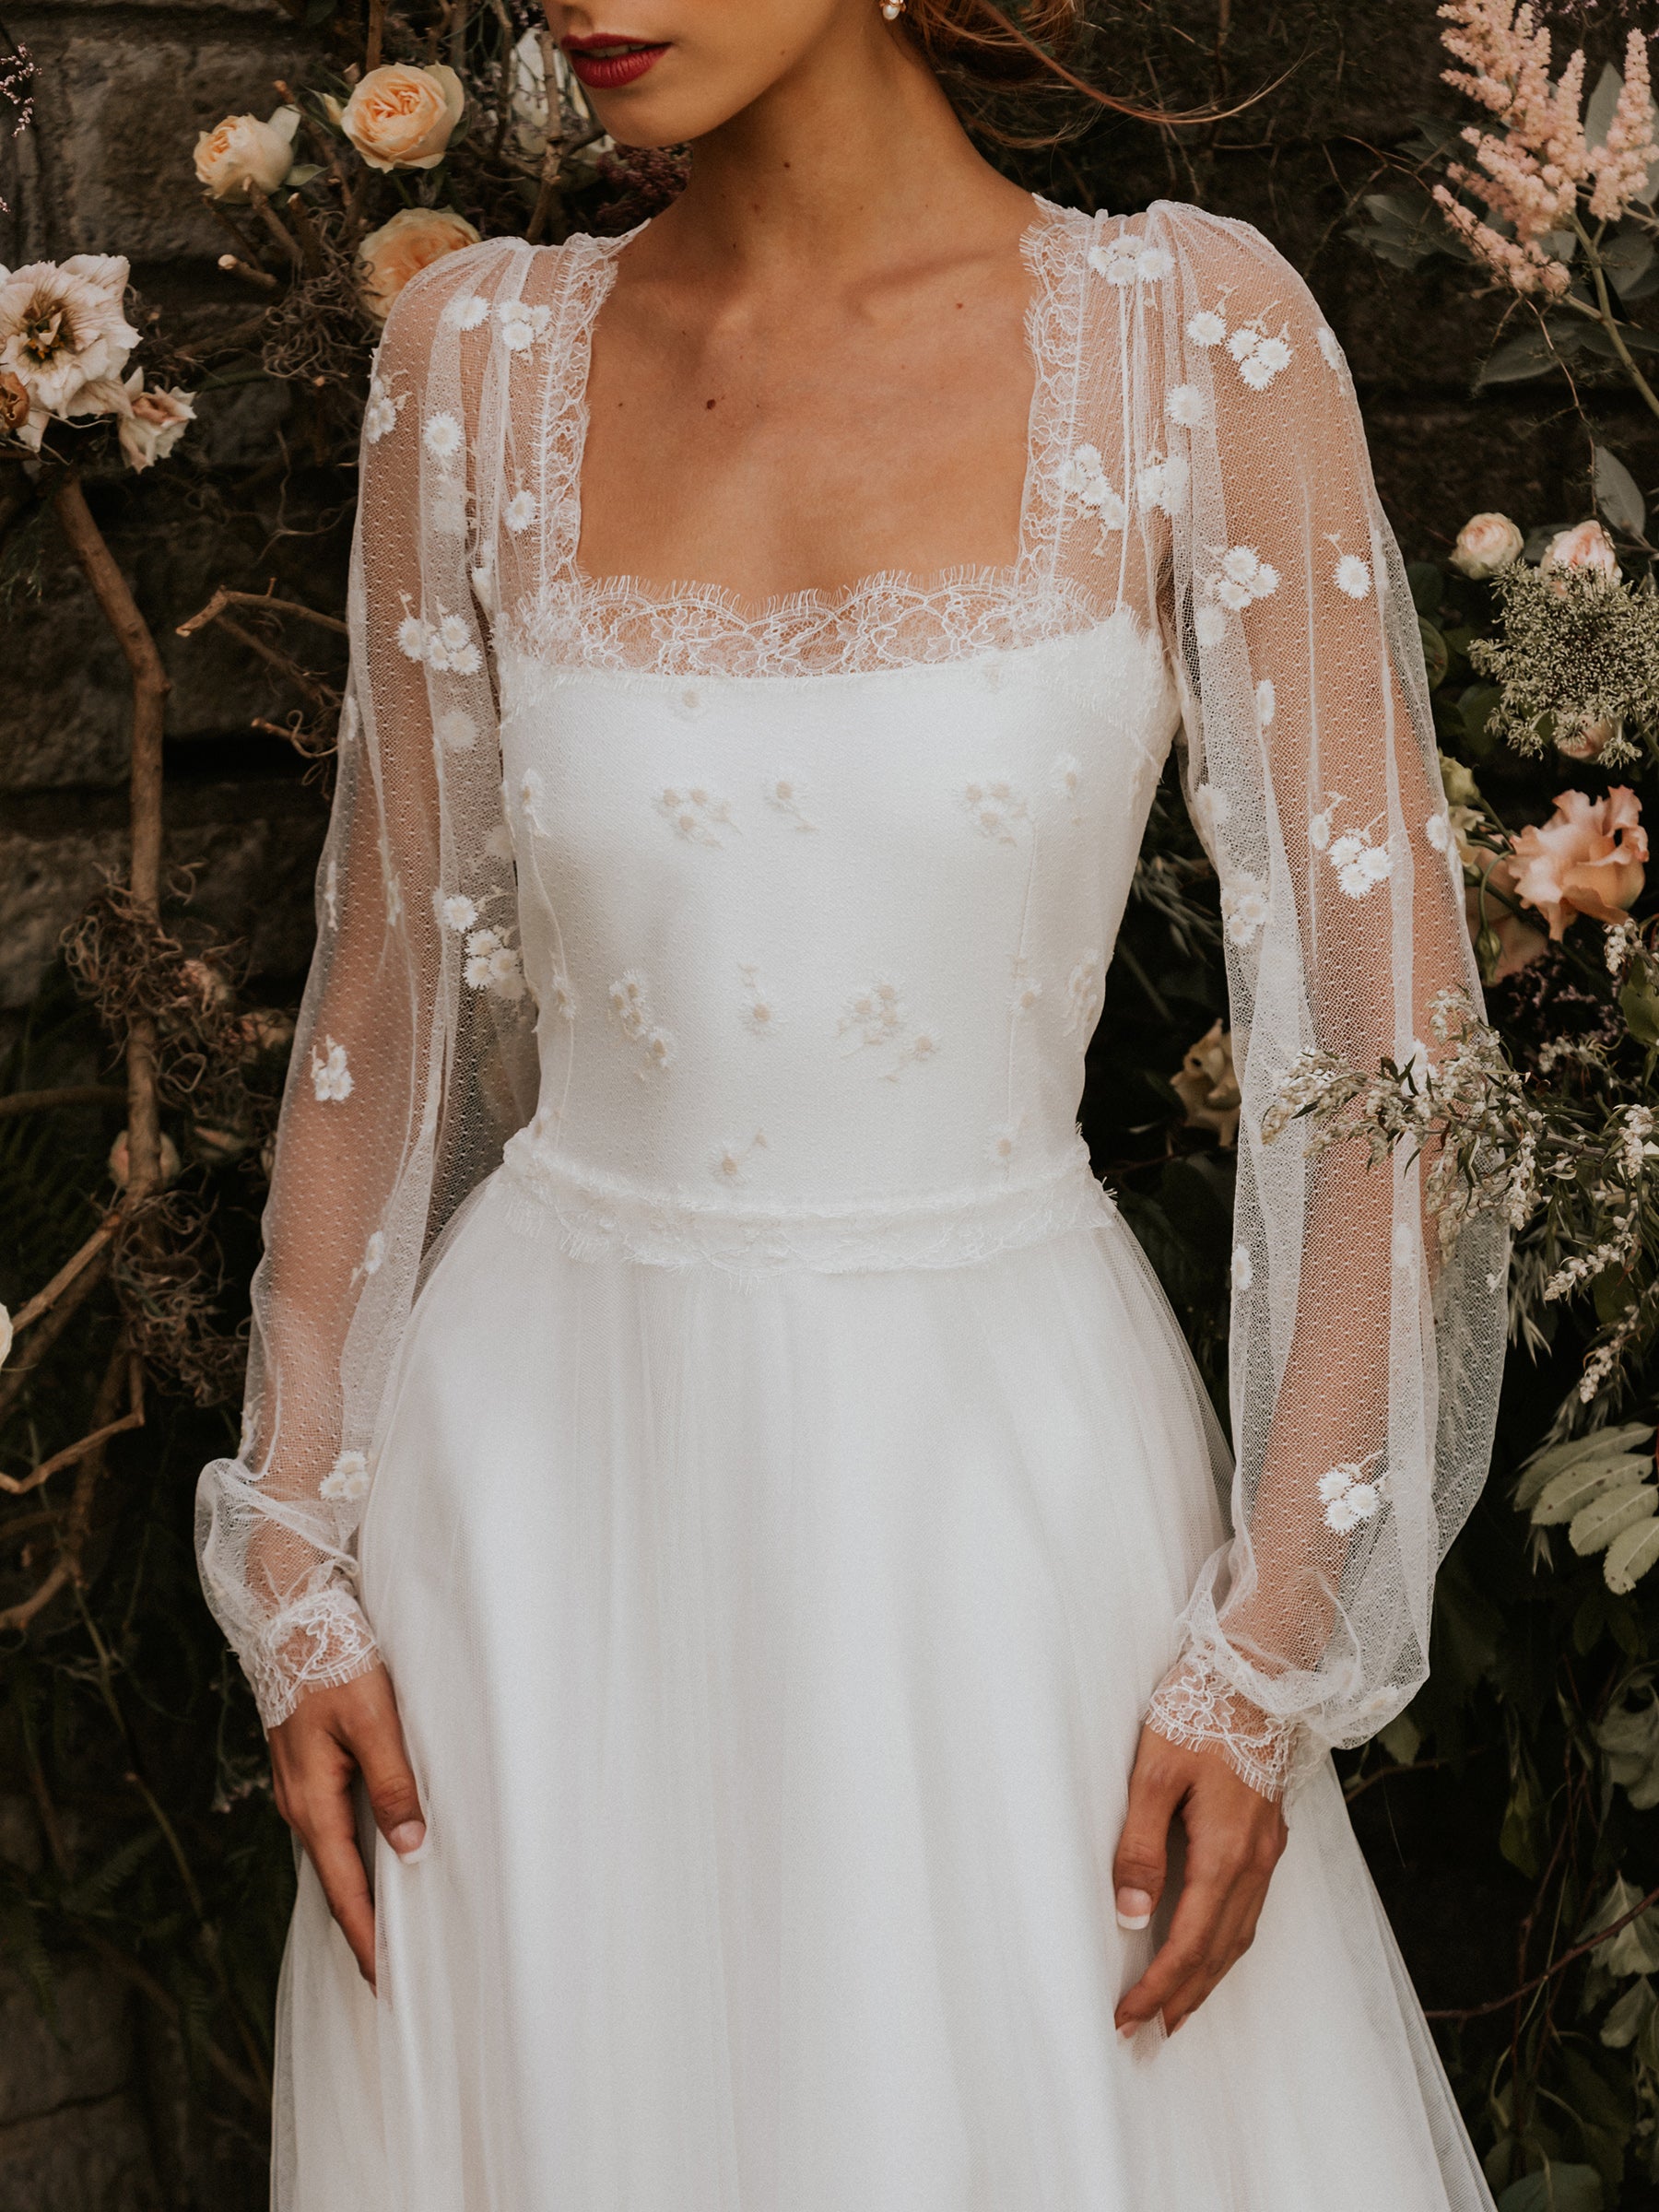 A Daisy Flower Lace Wedding Dress